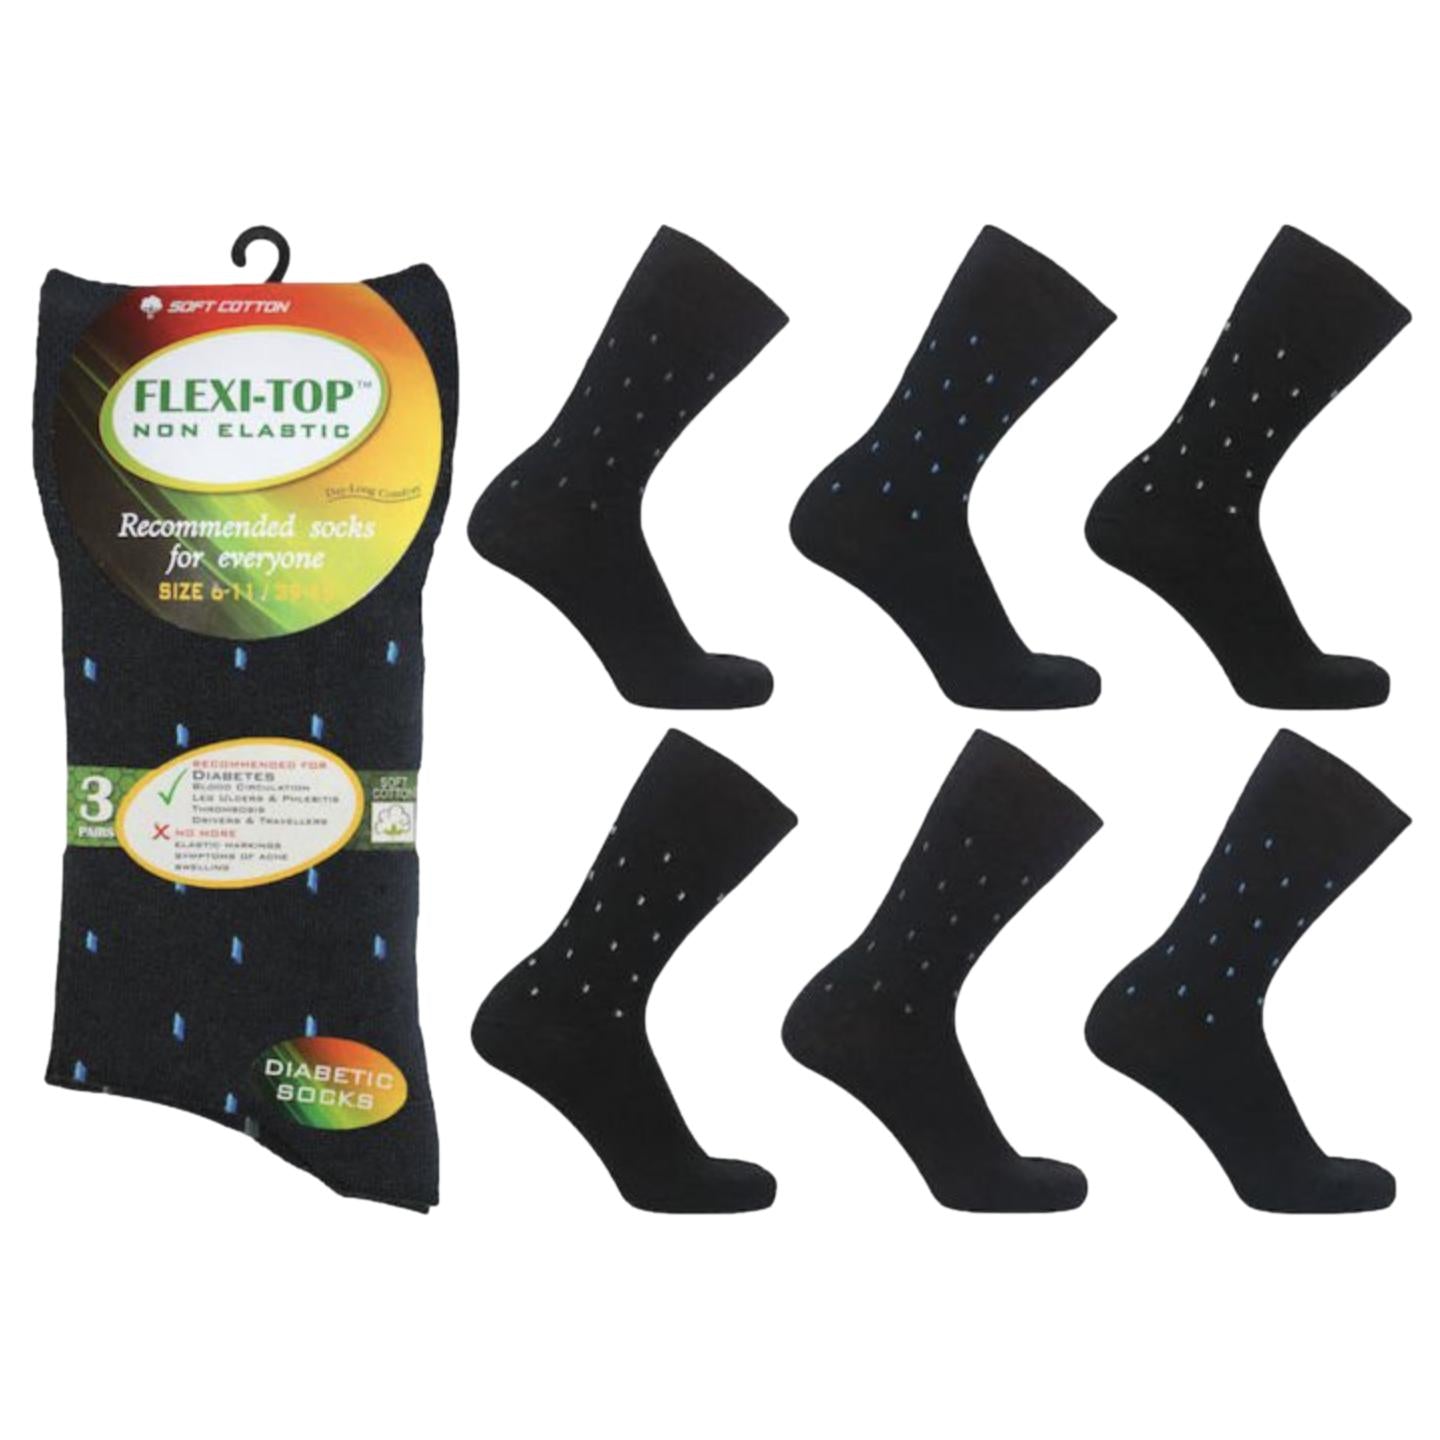 Affordable Men's Loose Top Socks - Pack of 3